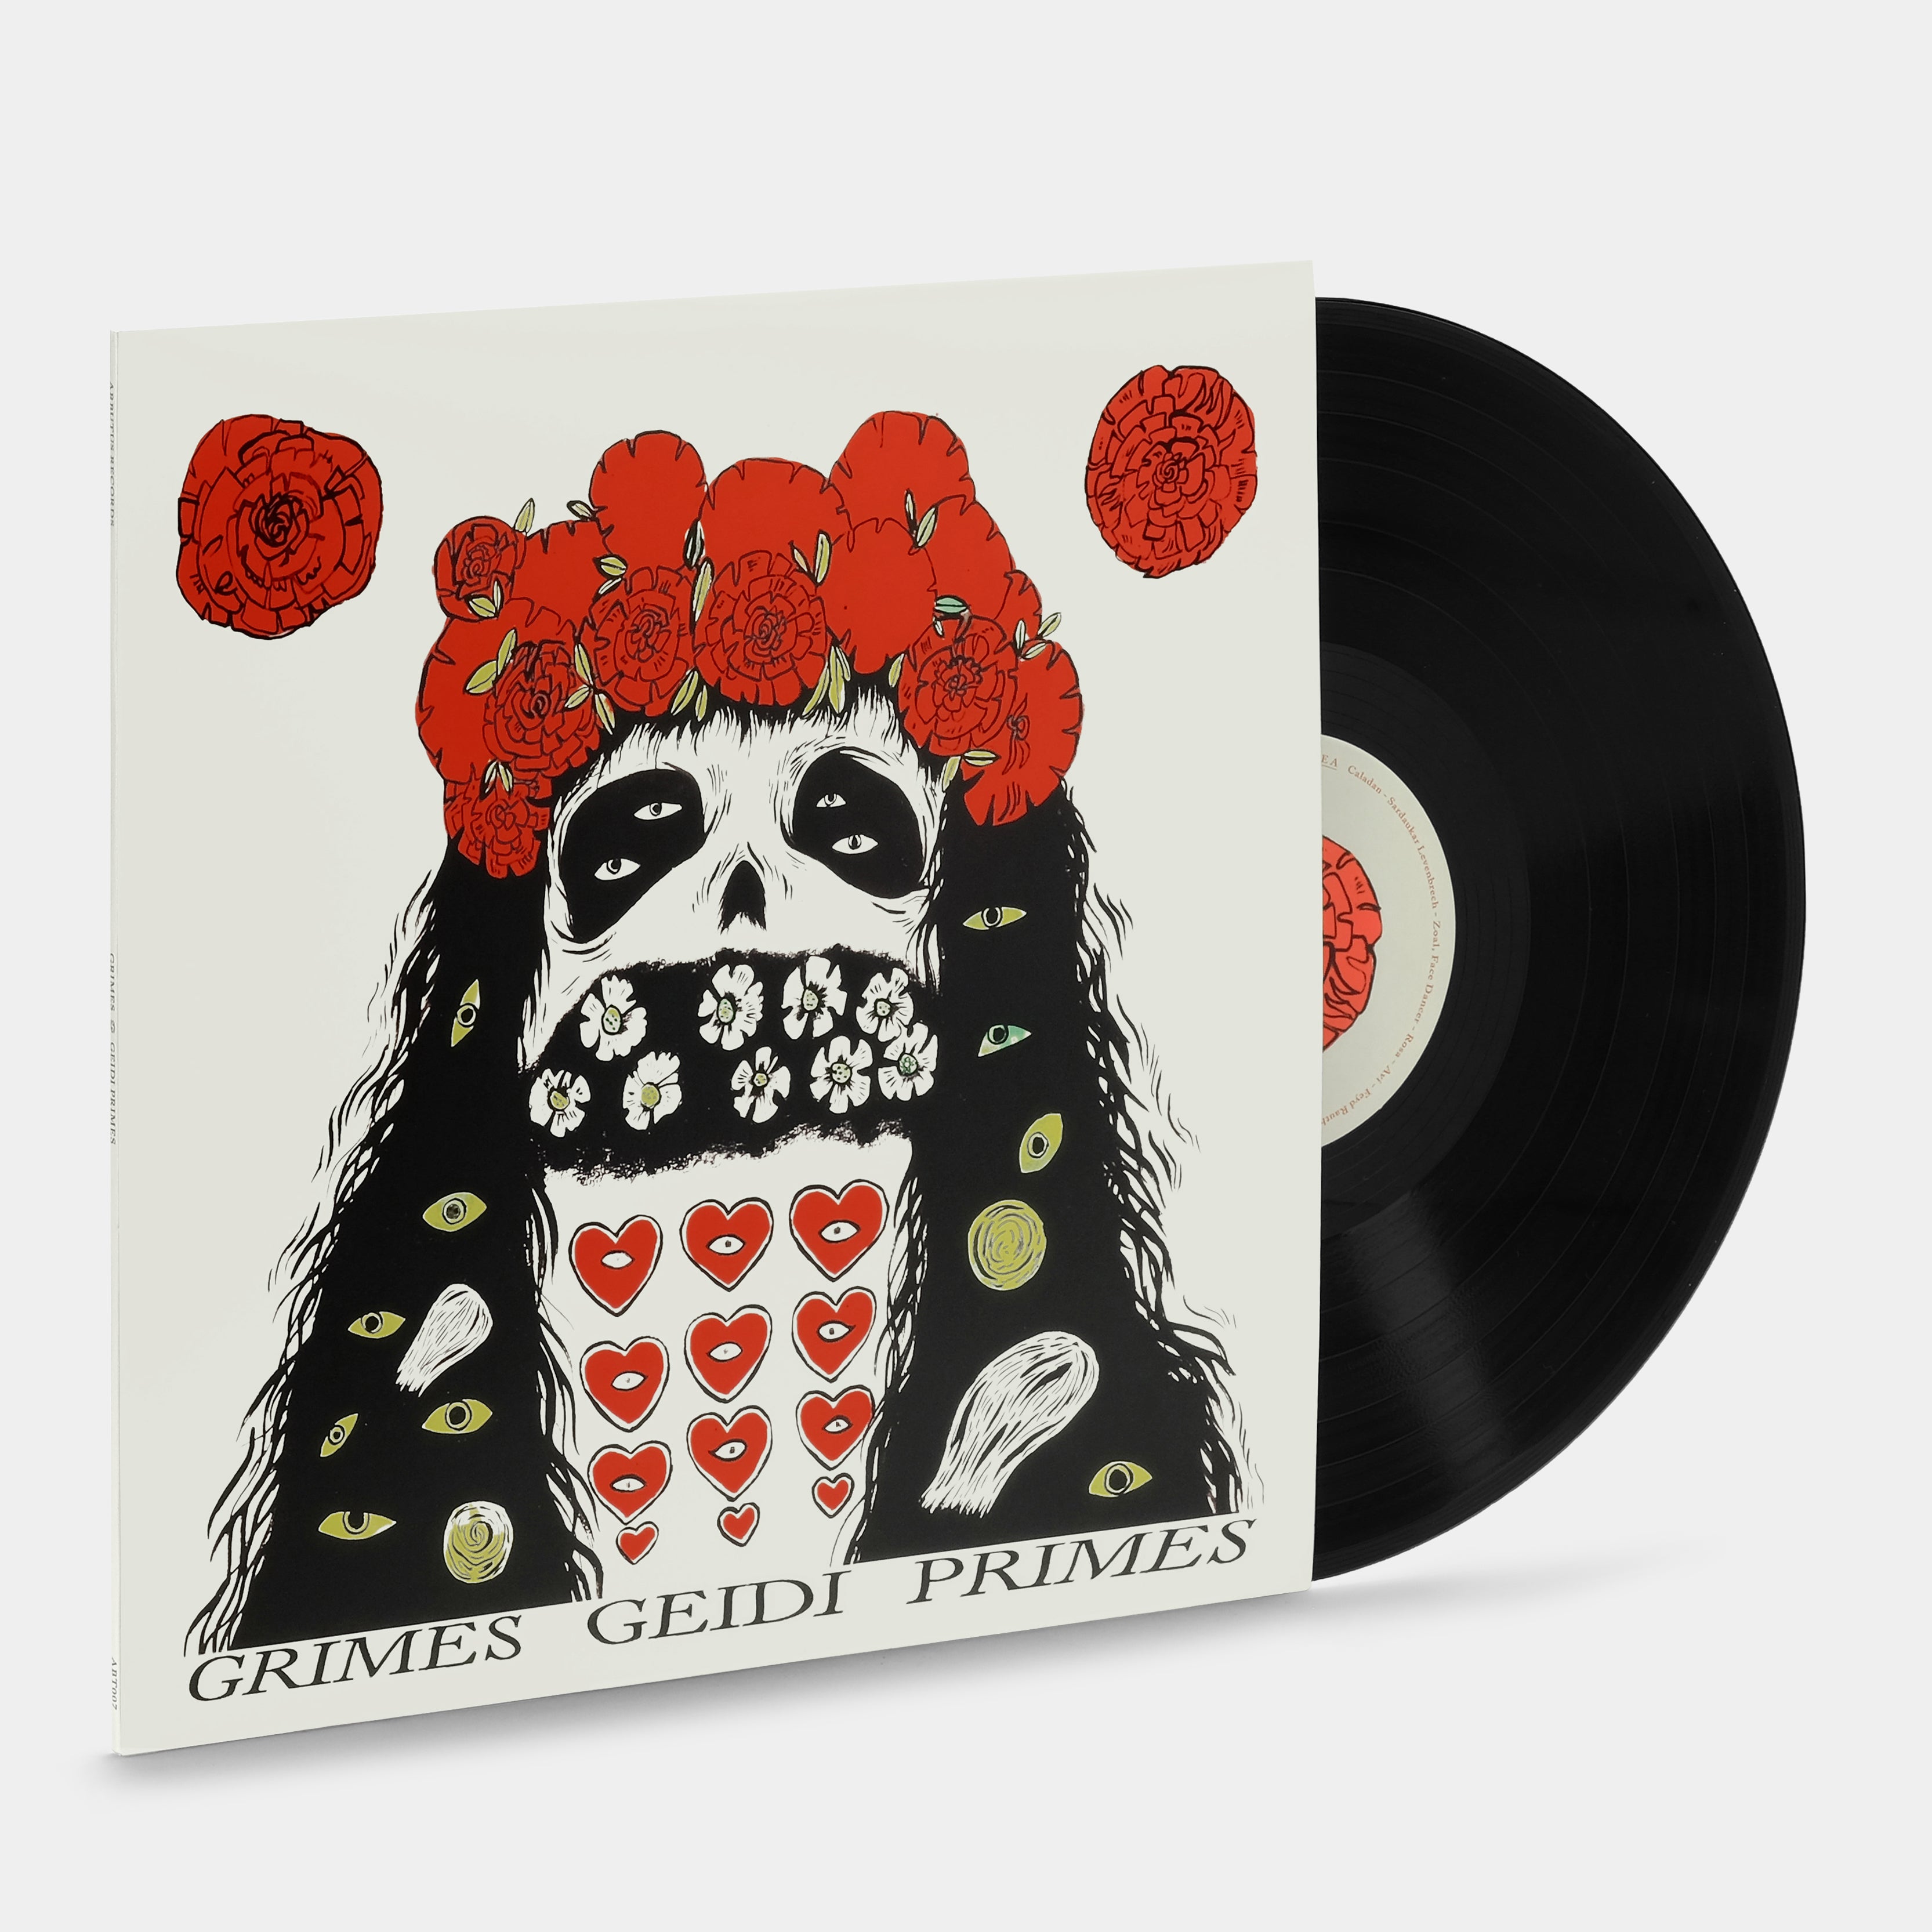 Grimes - Geidi Primes LP Vinyl Record